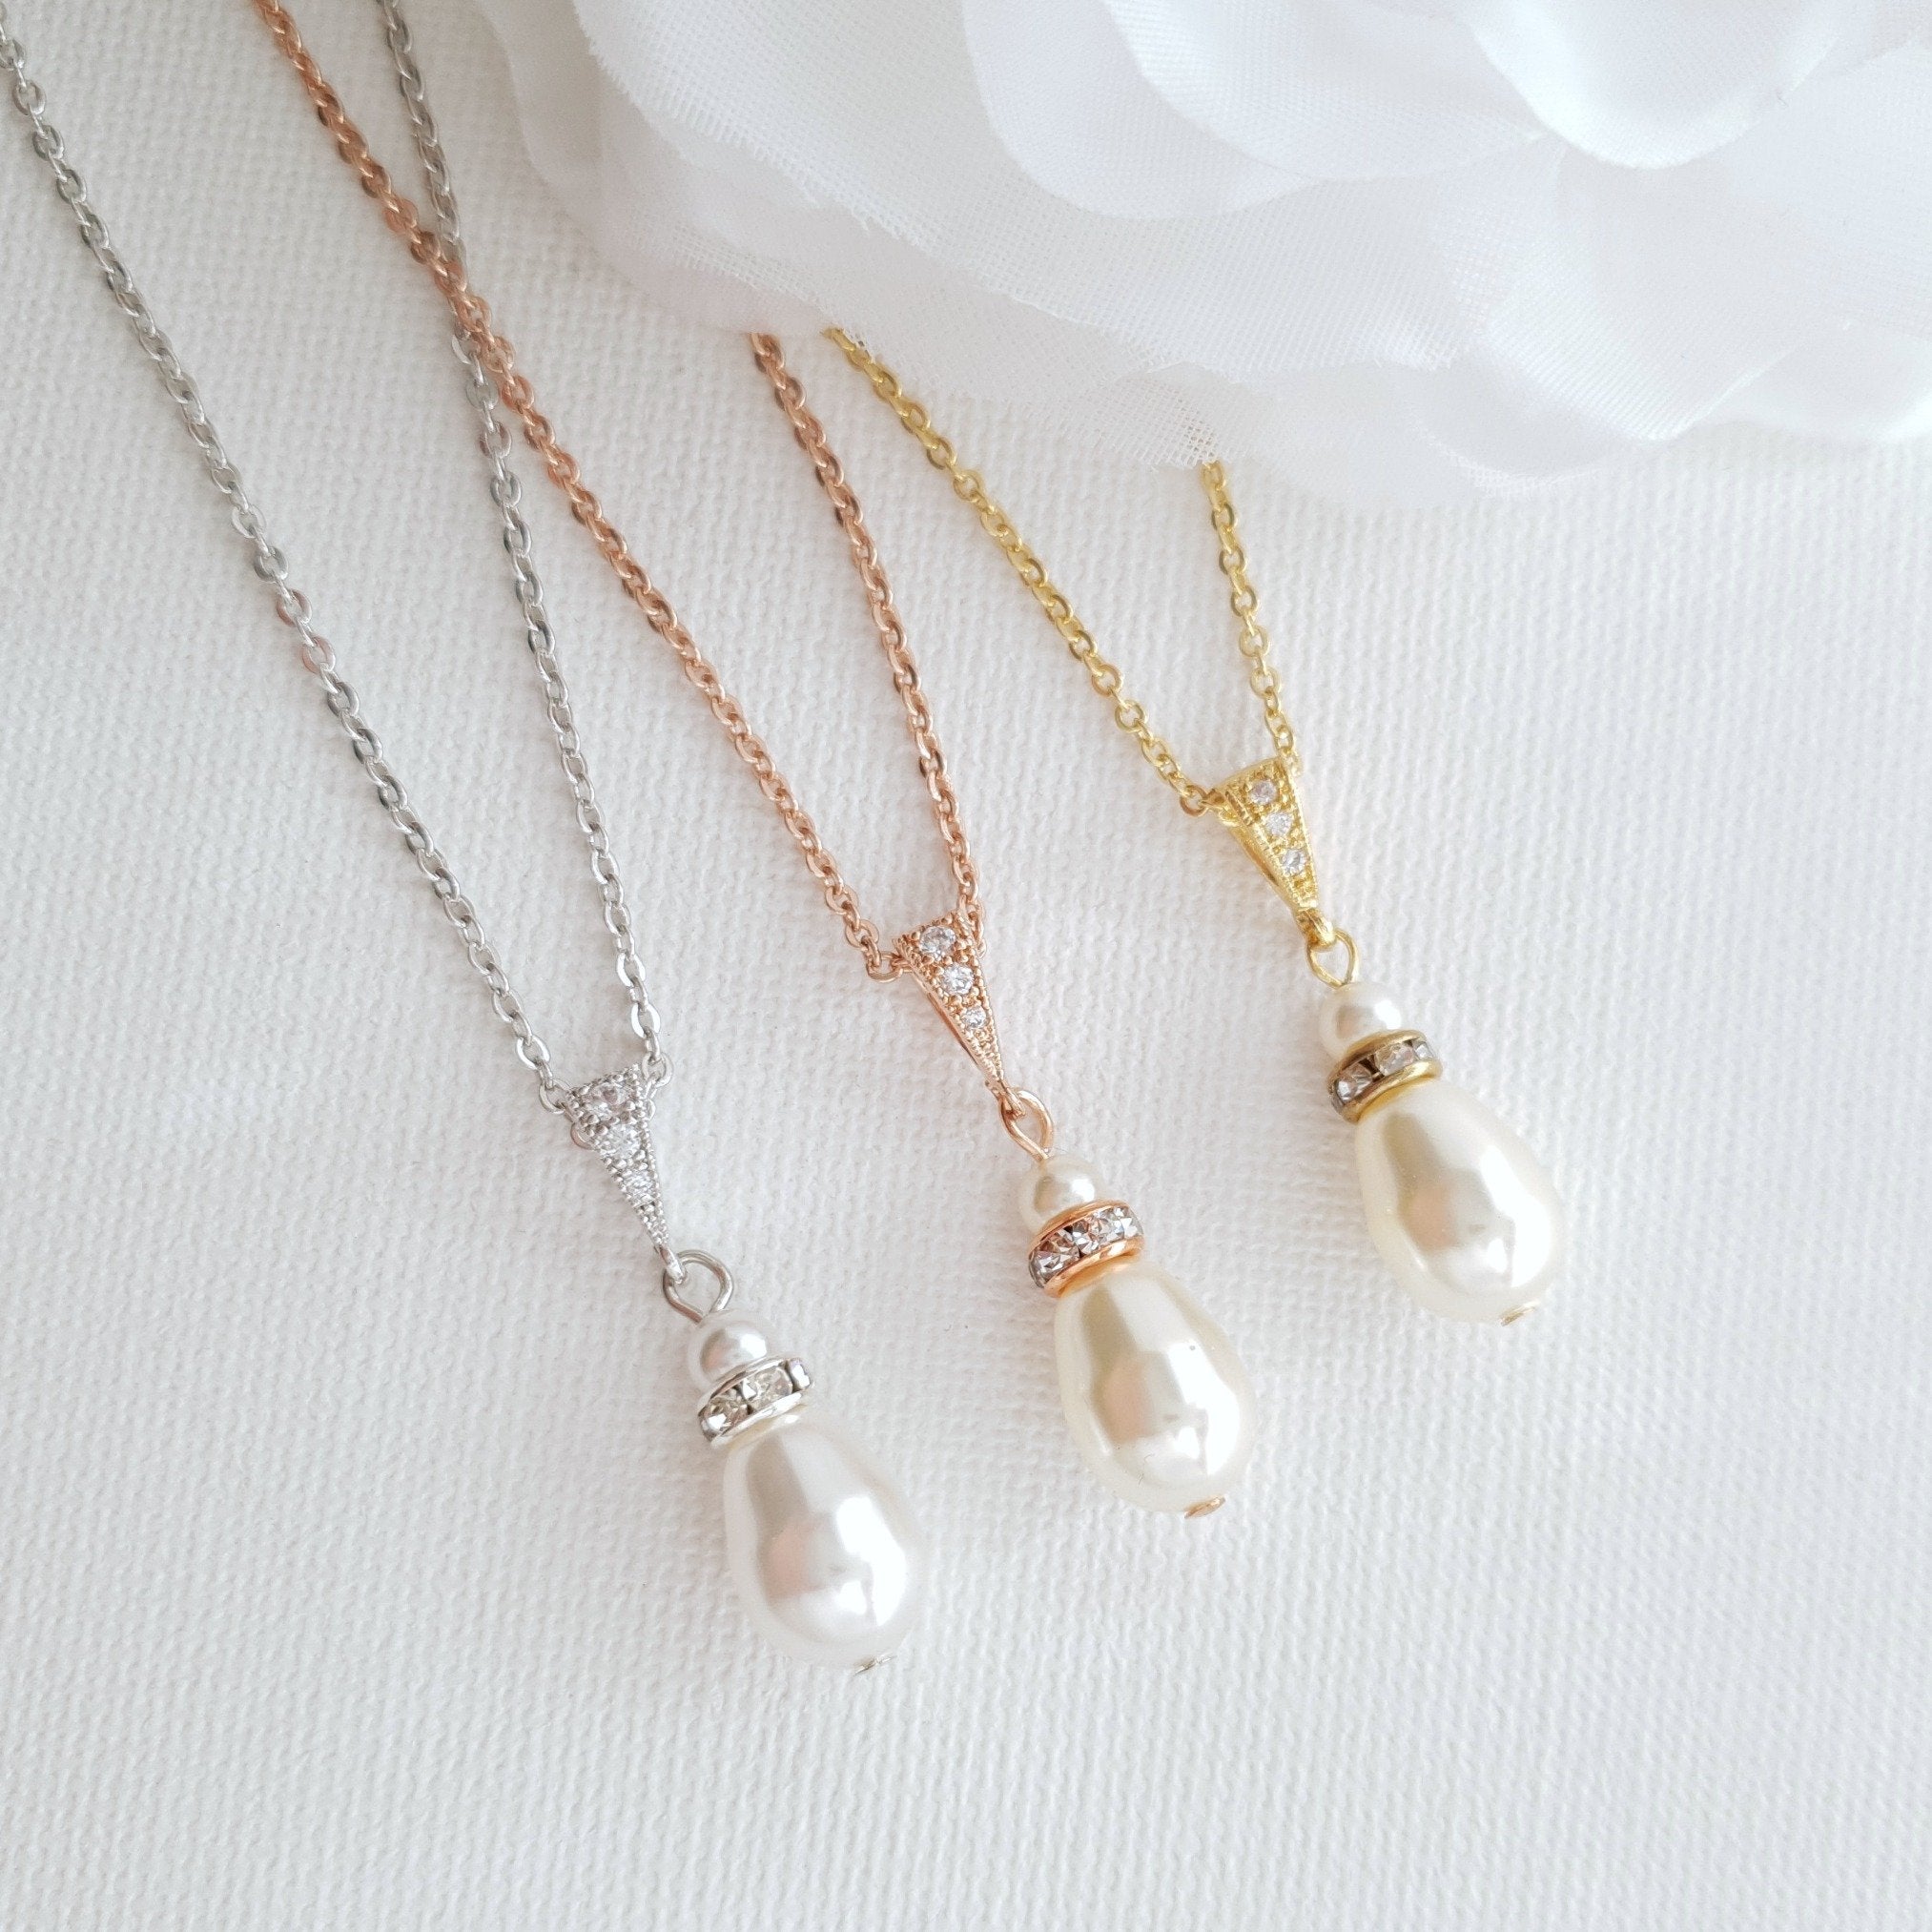 Buy Pearl Earring Necklace Bracelet Bridesmaids & Bridal Jewelry Set ...